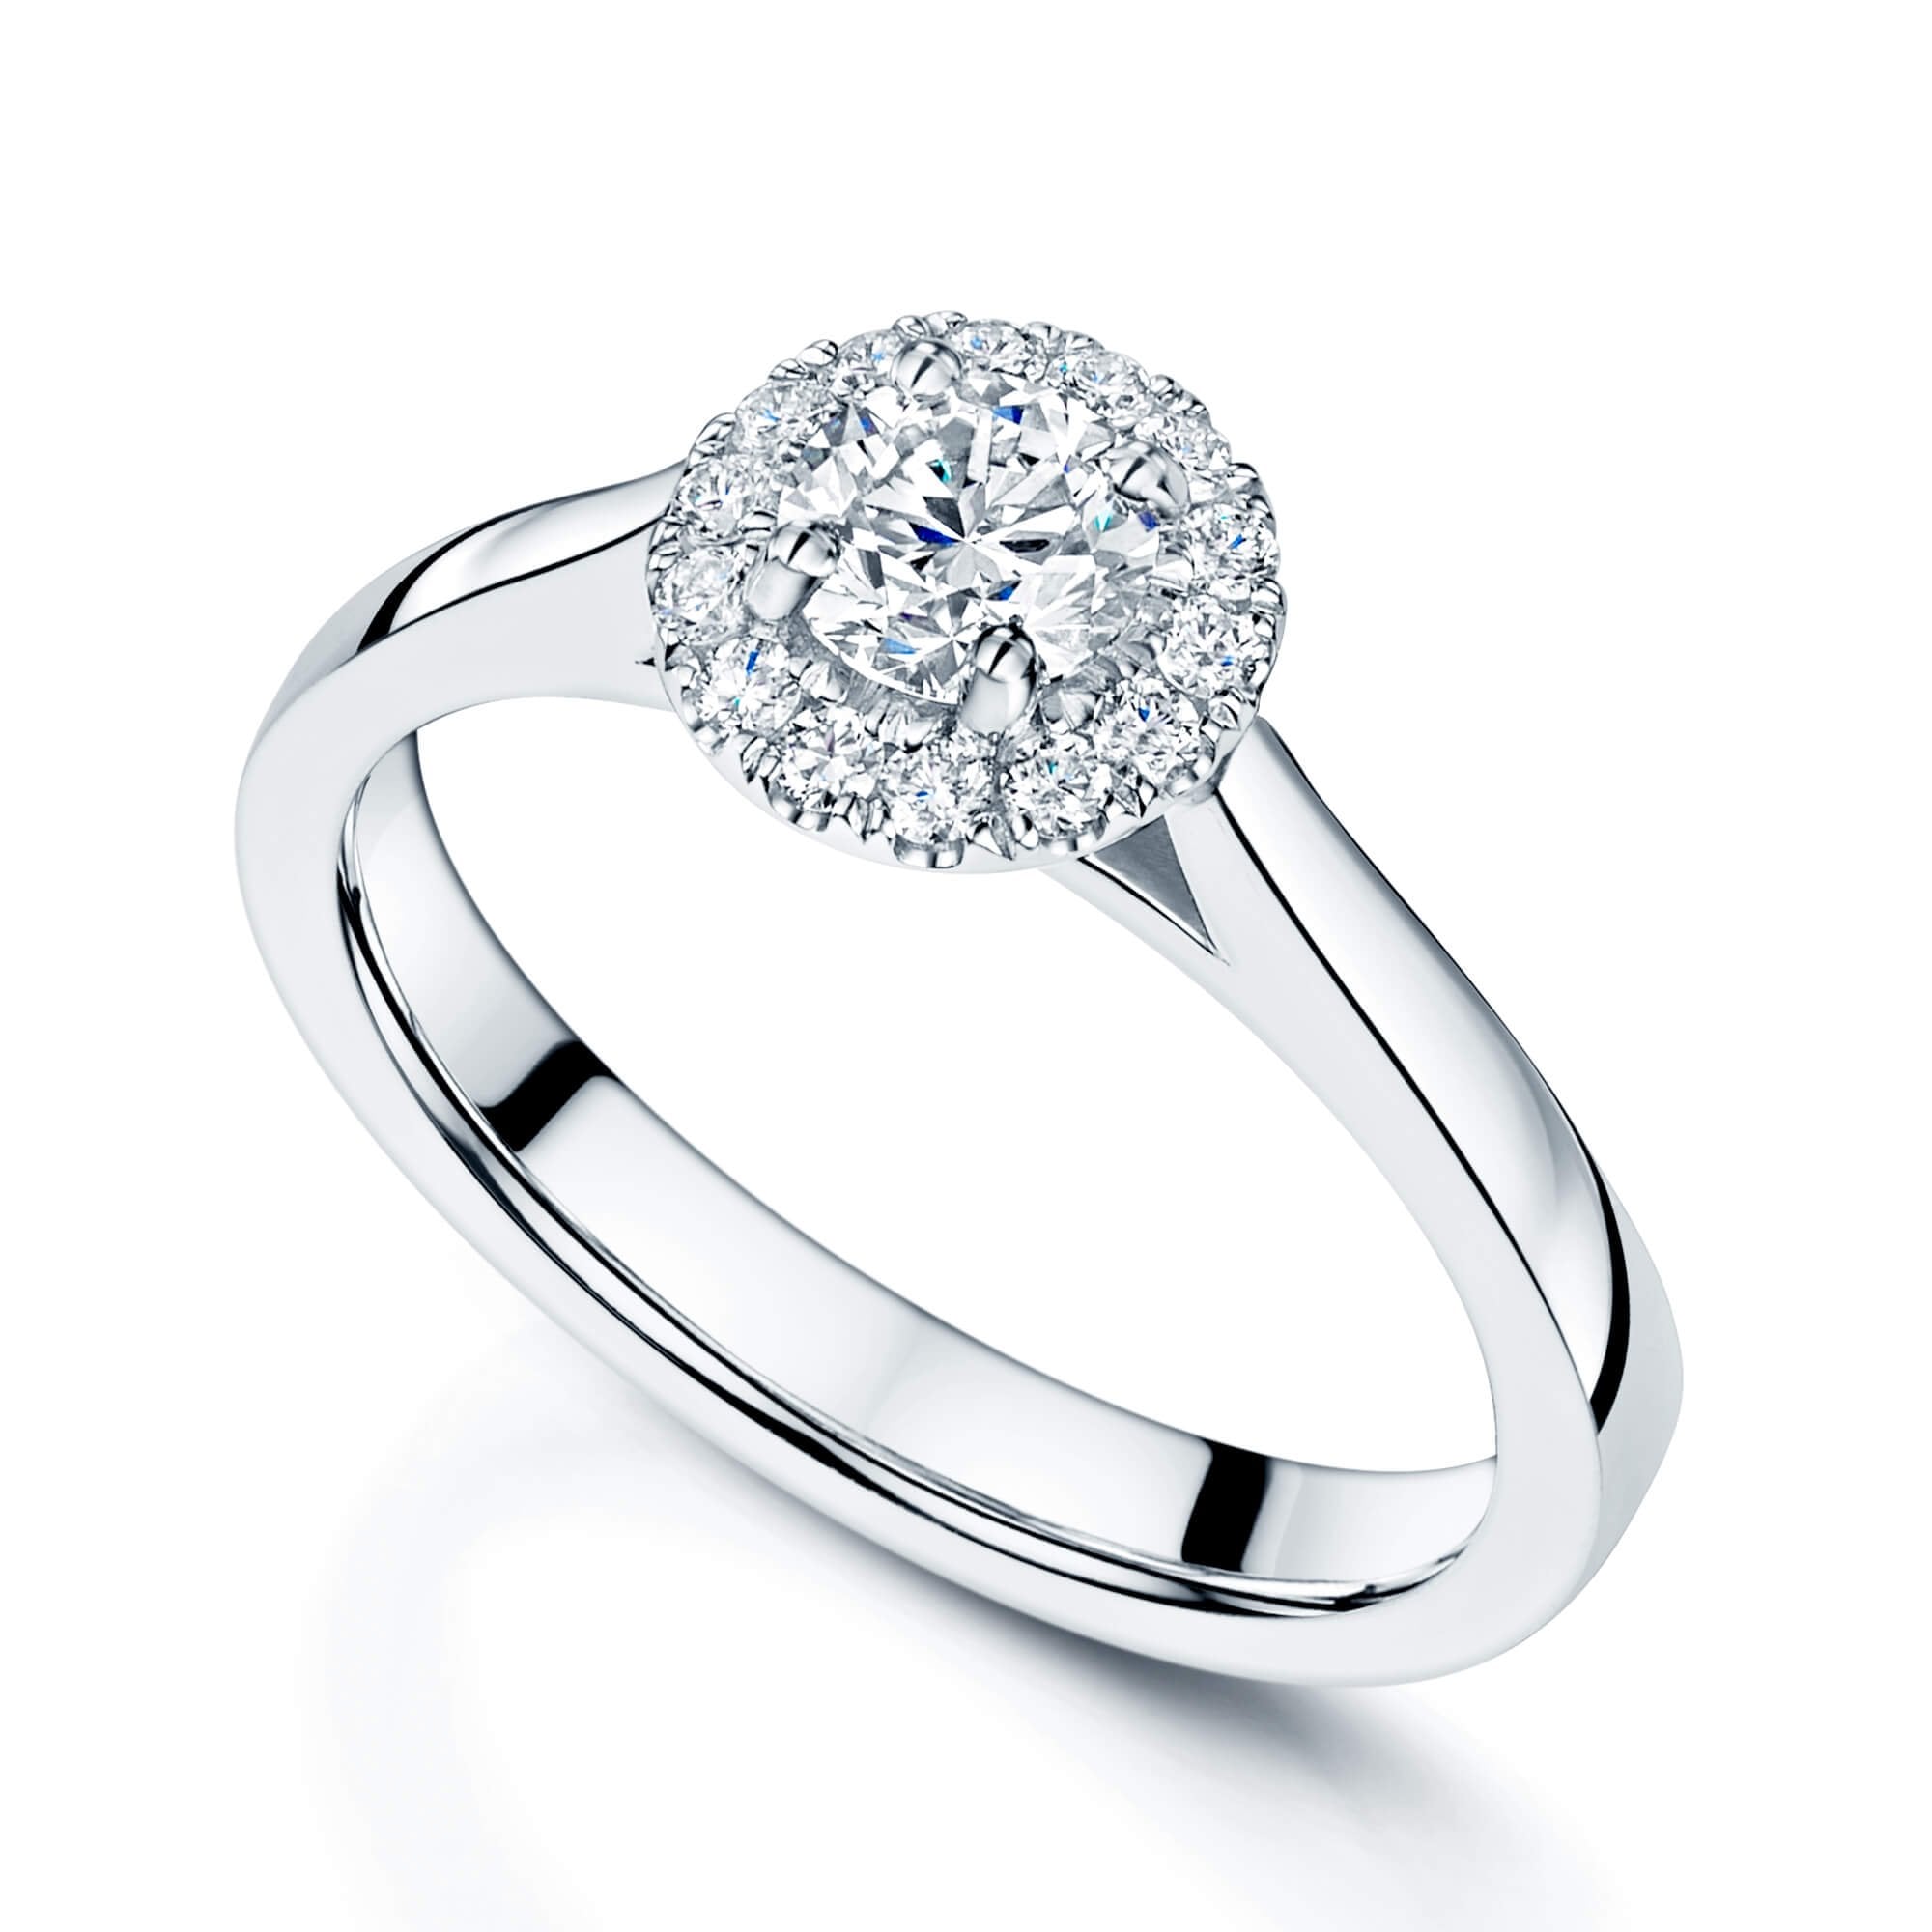 Platinum GIA Certificated Round Brilliant Cut Diamond Ring With Diamond Halo Surround